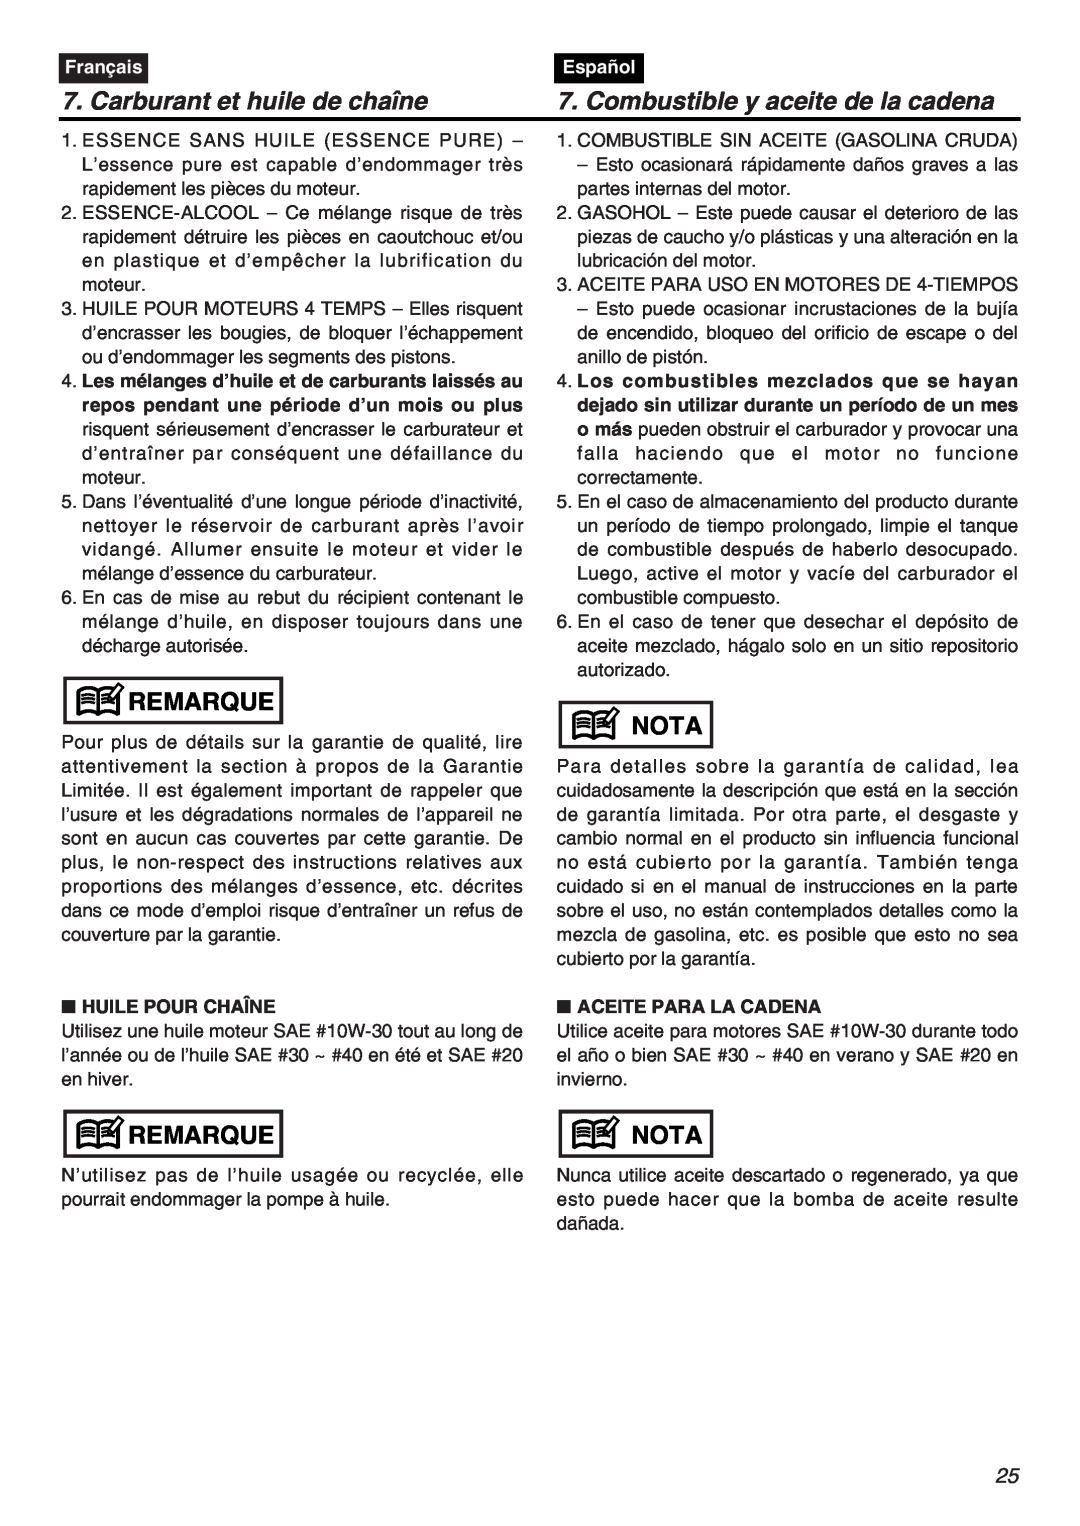 RedMax G5000AVS manual Carburant et huile de chaîne, Combustible y aceite de la cadena, Remarque, Nota, Français, Español 